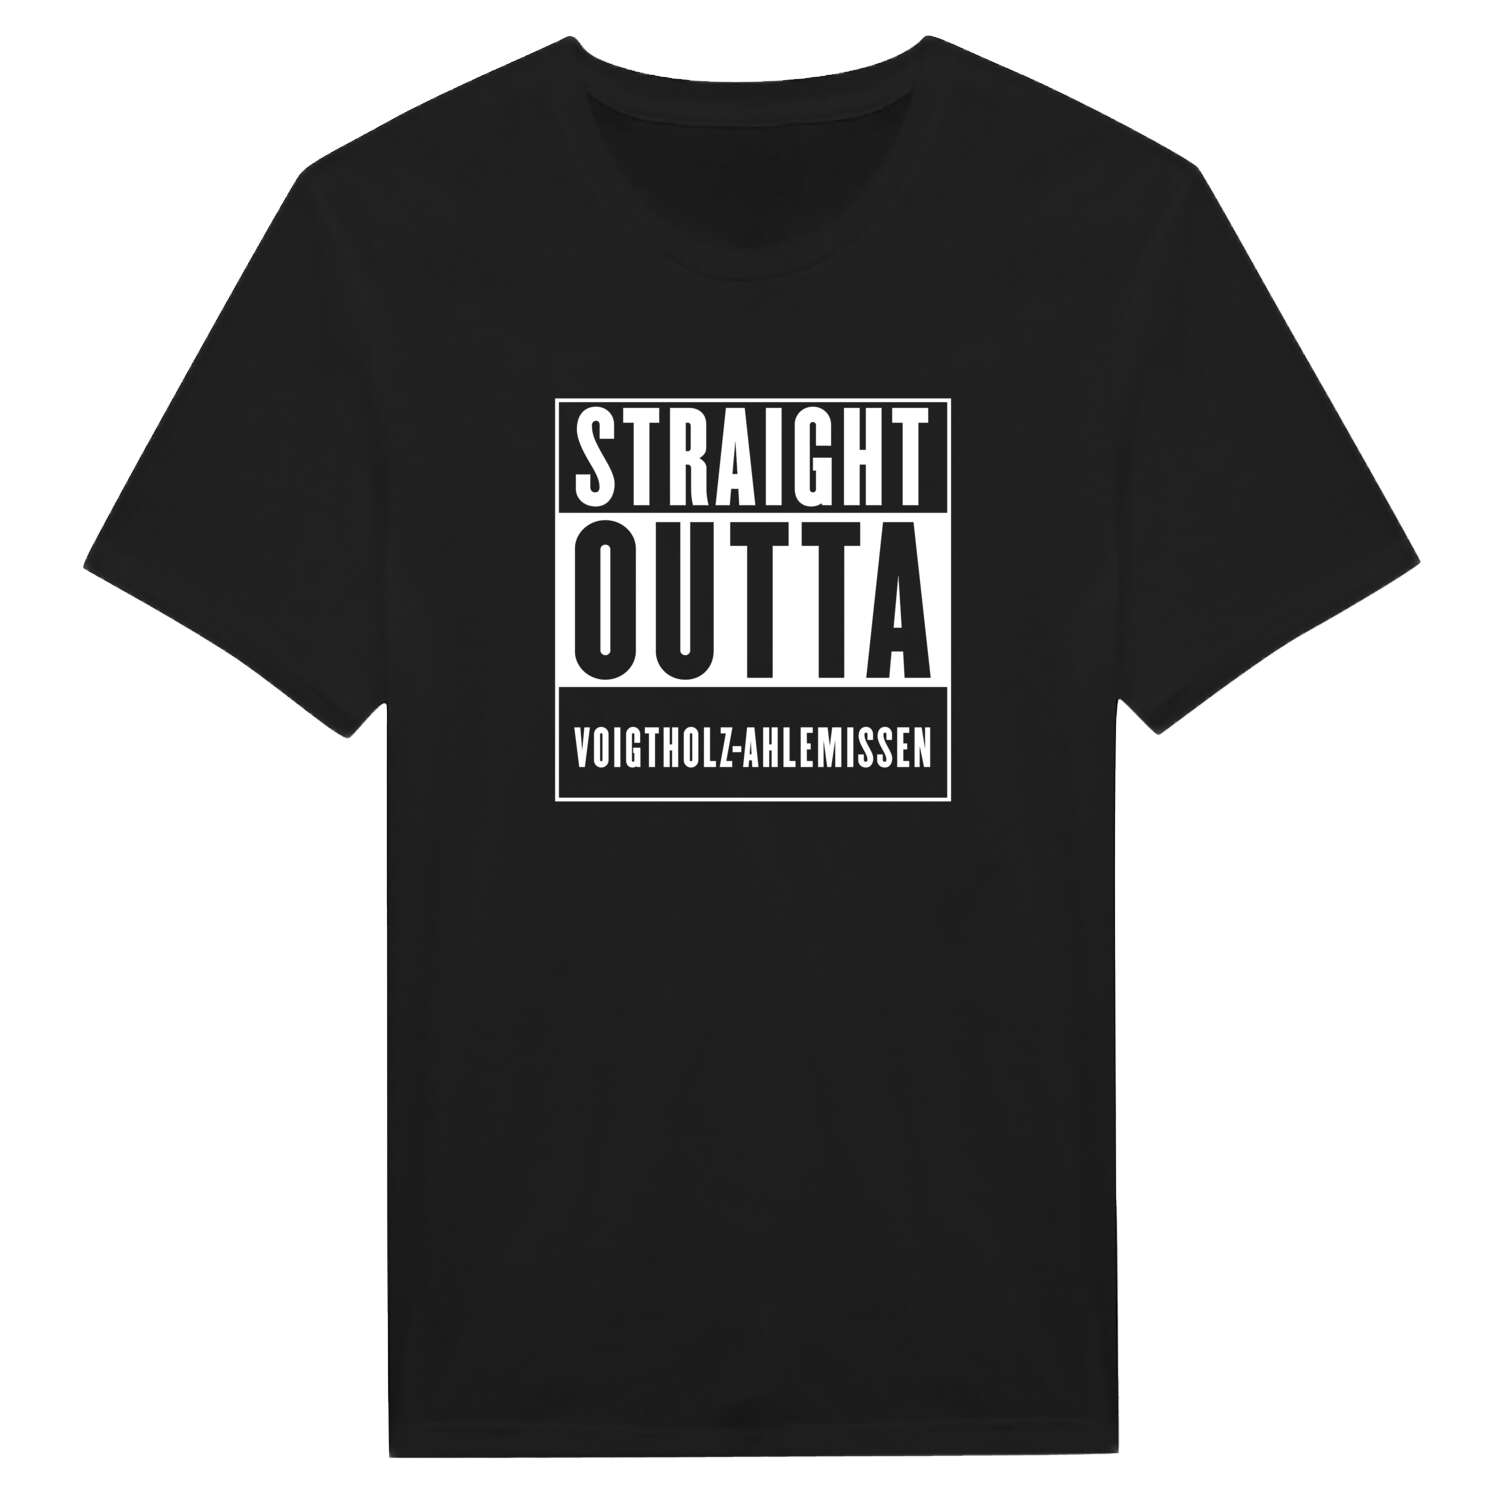 Voigtholz-Ahlemissen T-Shirt »Straight Outta«